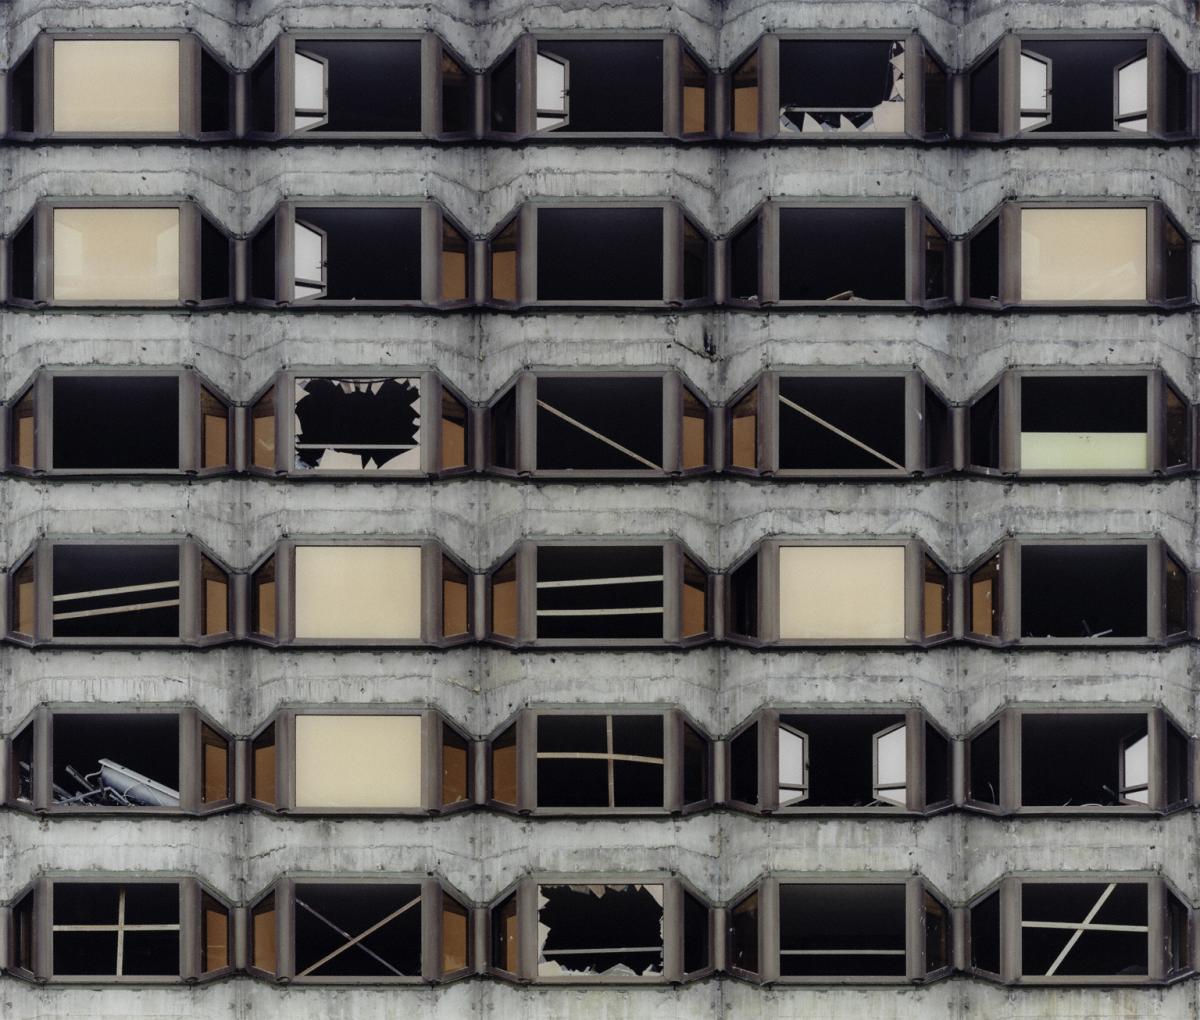 Grid of dilapidated windows of building